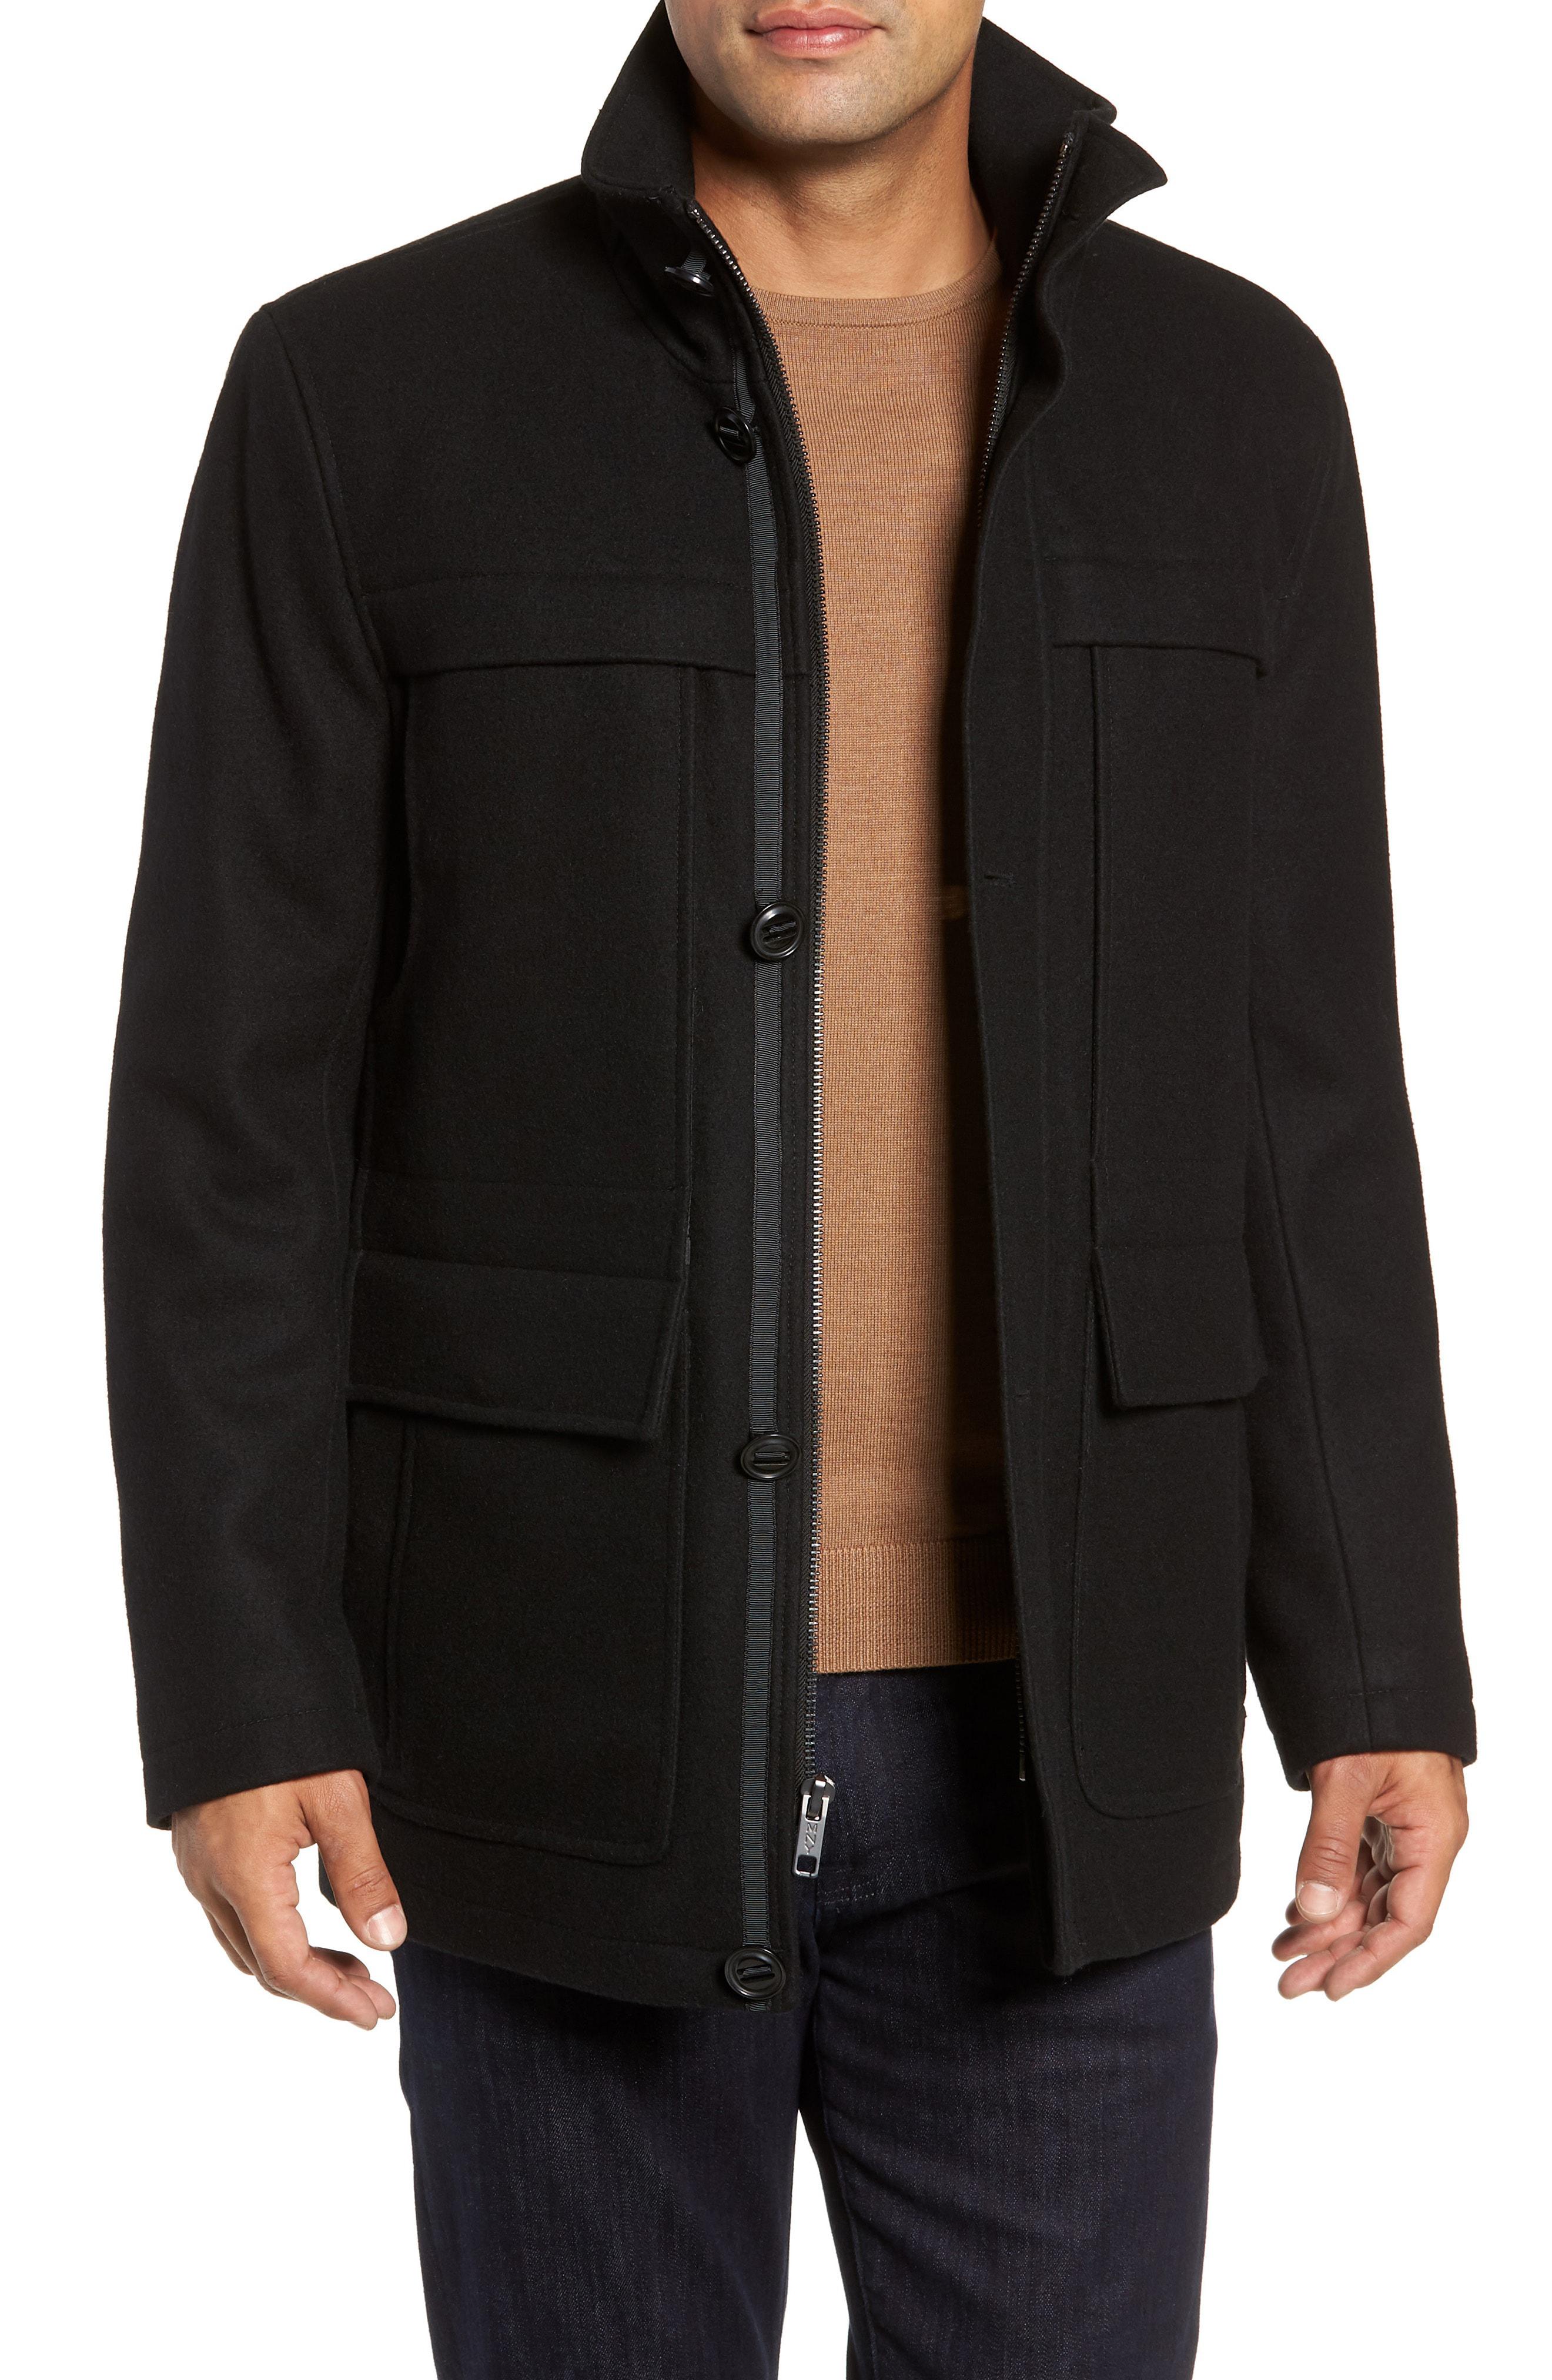 Marc New York Brantley Wool Blend Car Coat in Black for Men - Lyst